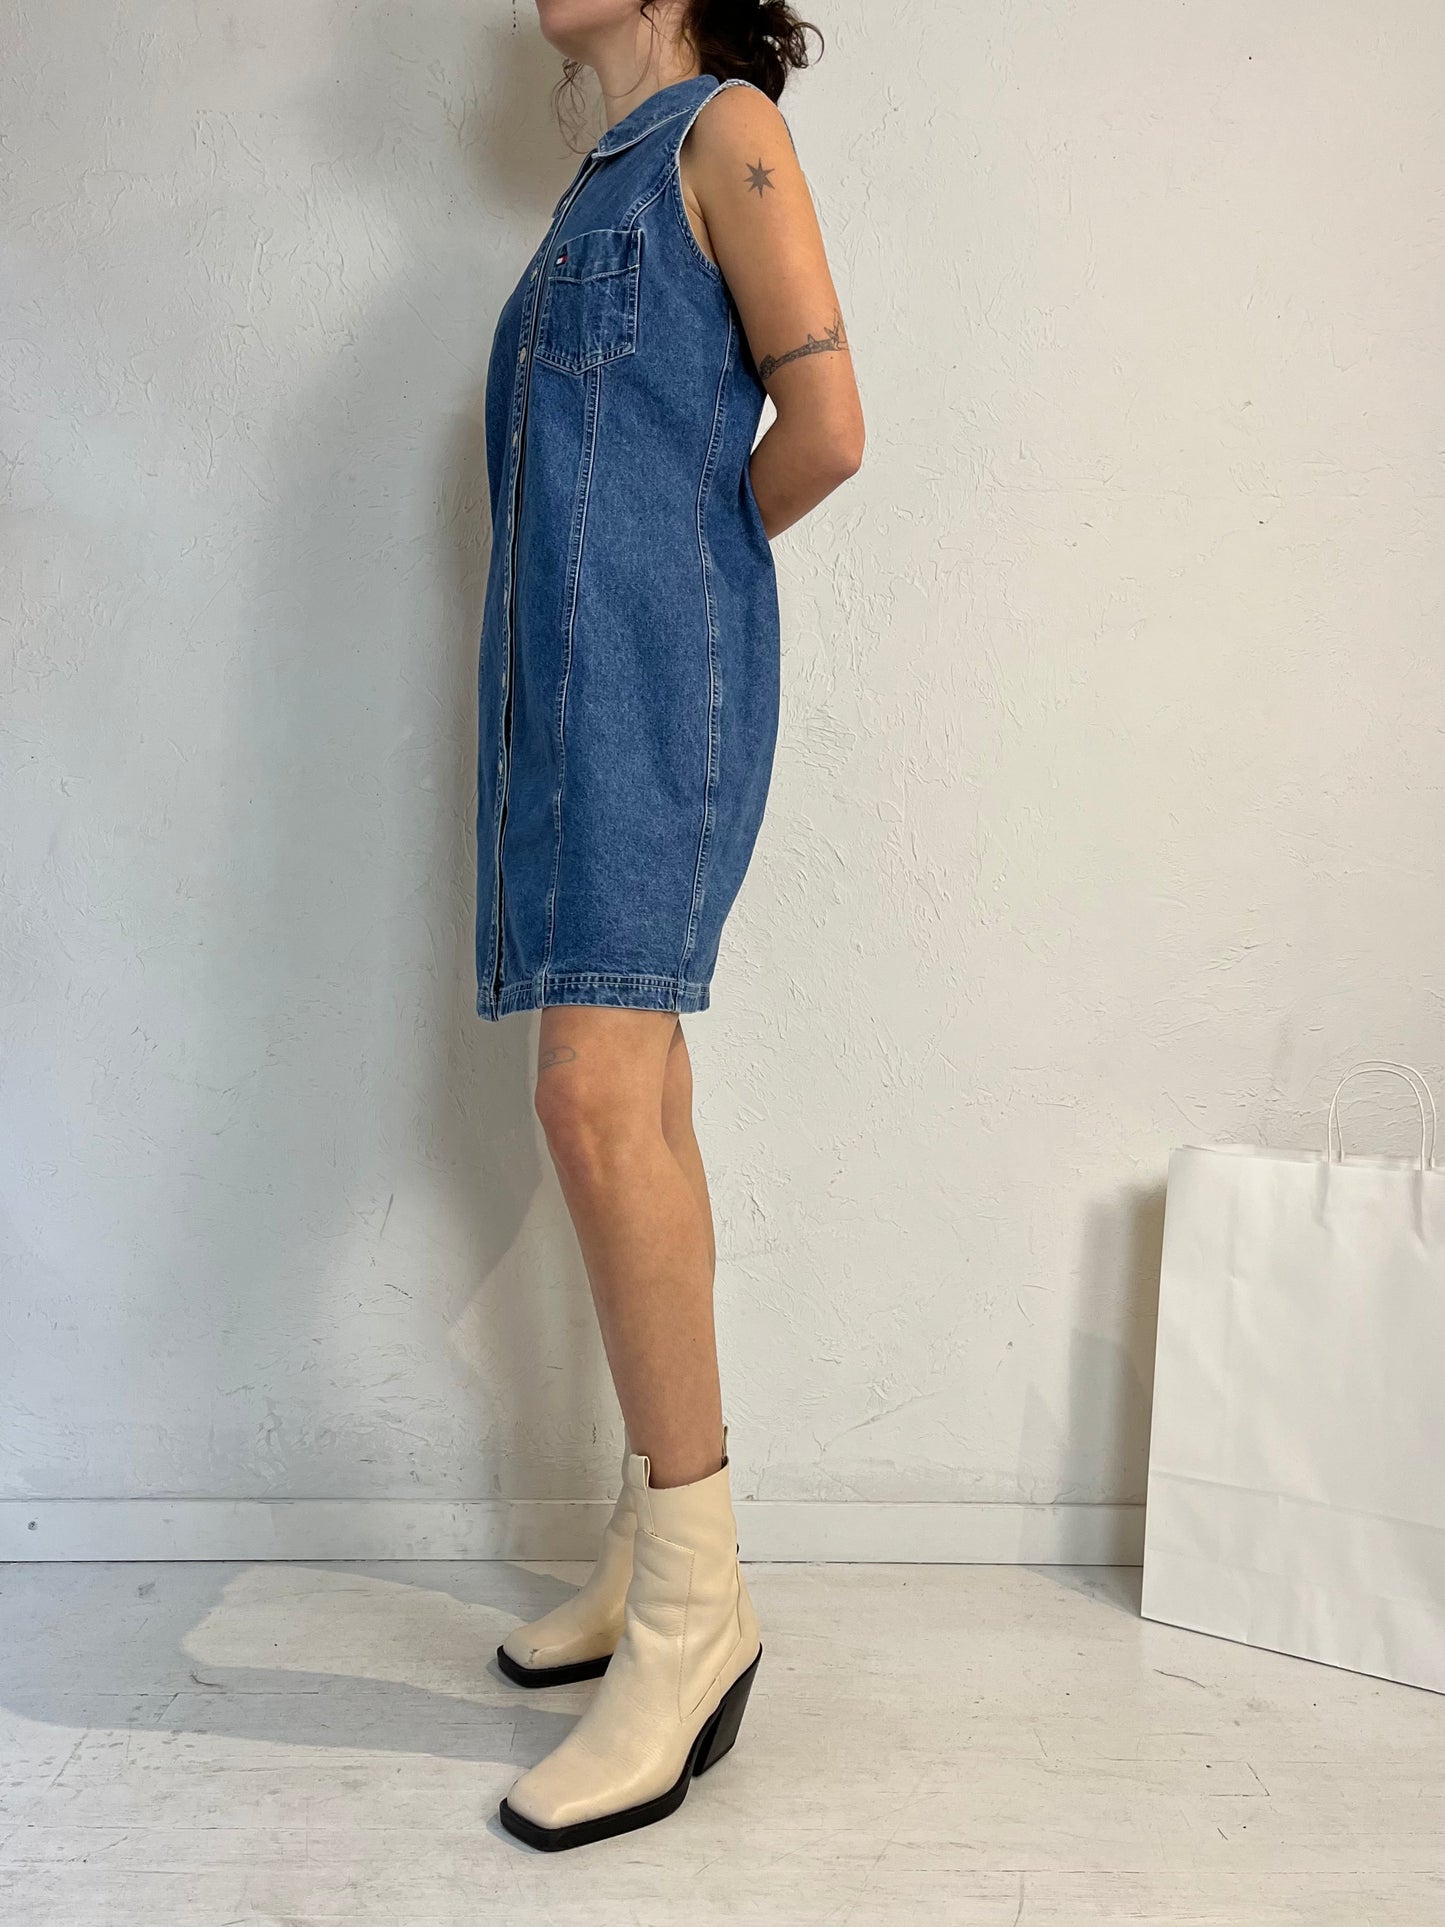 Y2k 'Tommy Hilfiger' Snap Up Denim Mini Dress / Medium